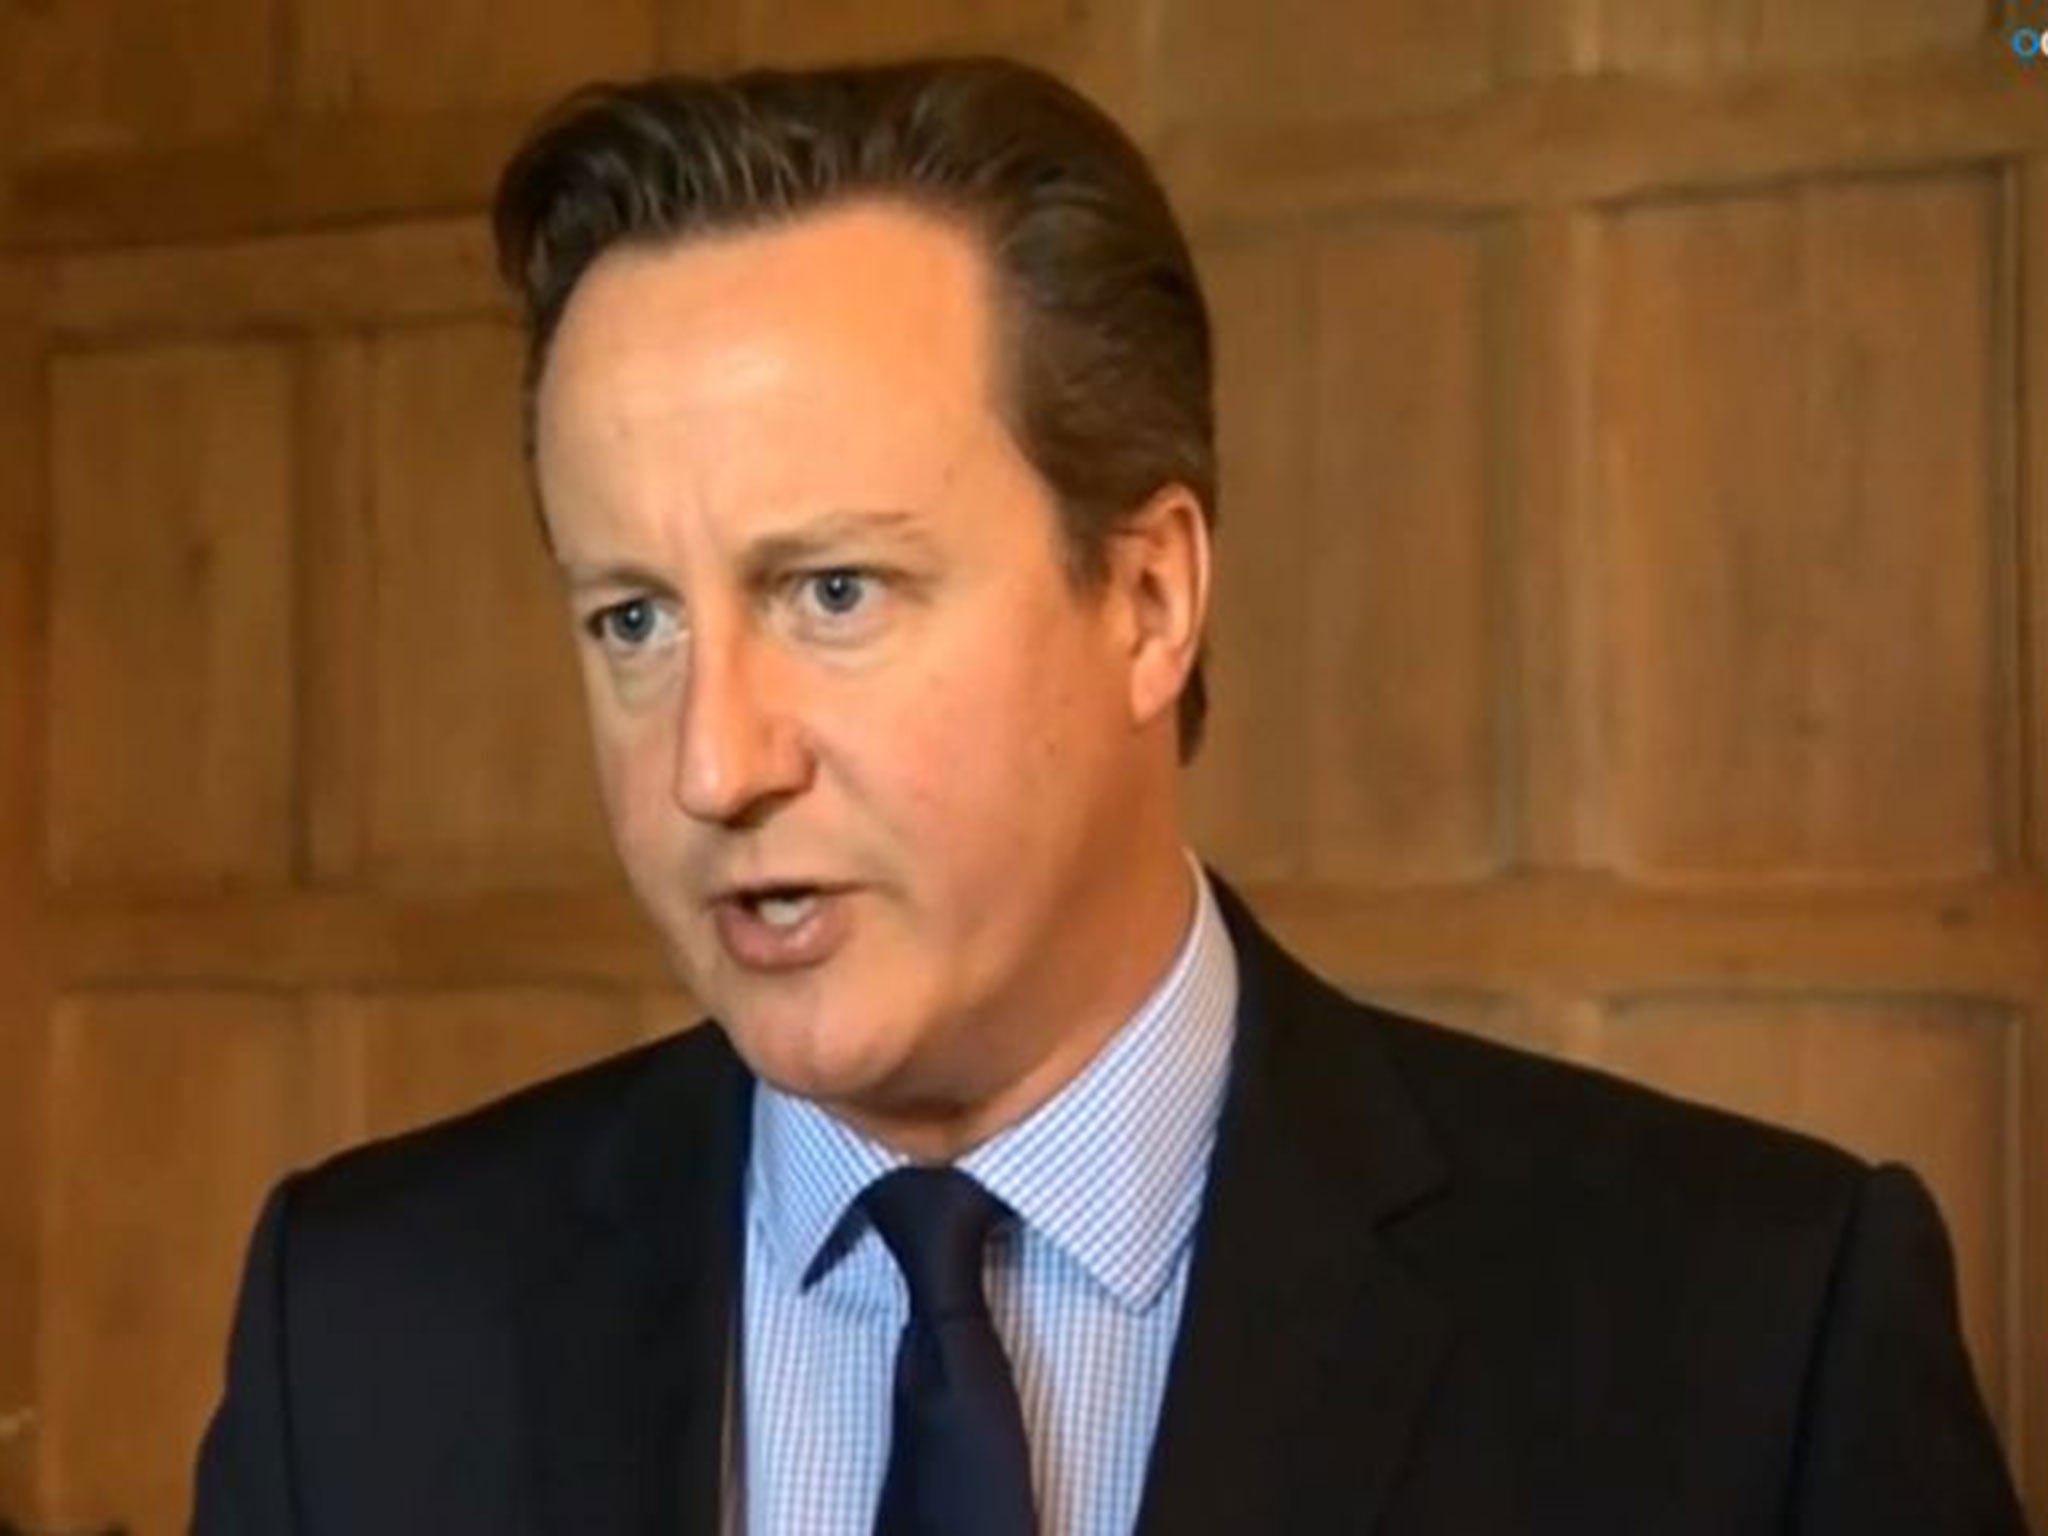 David Cameron spoke of the struggle against Islamic terrorism on Saturday